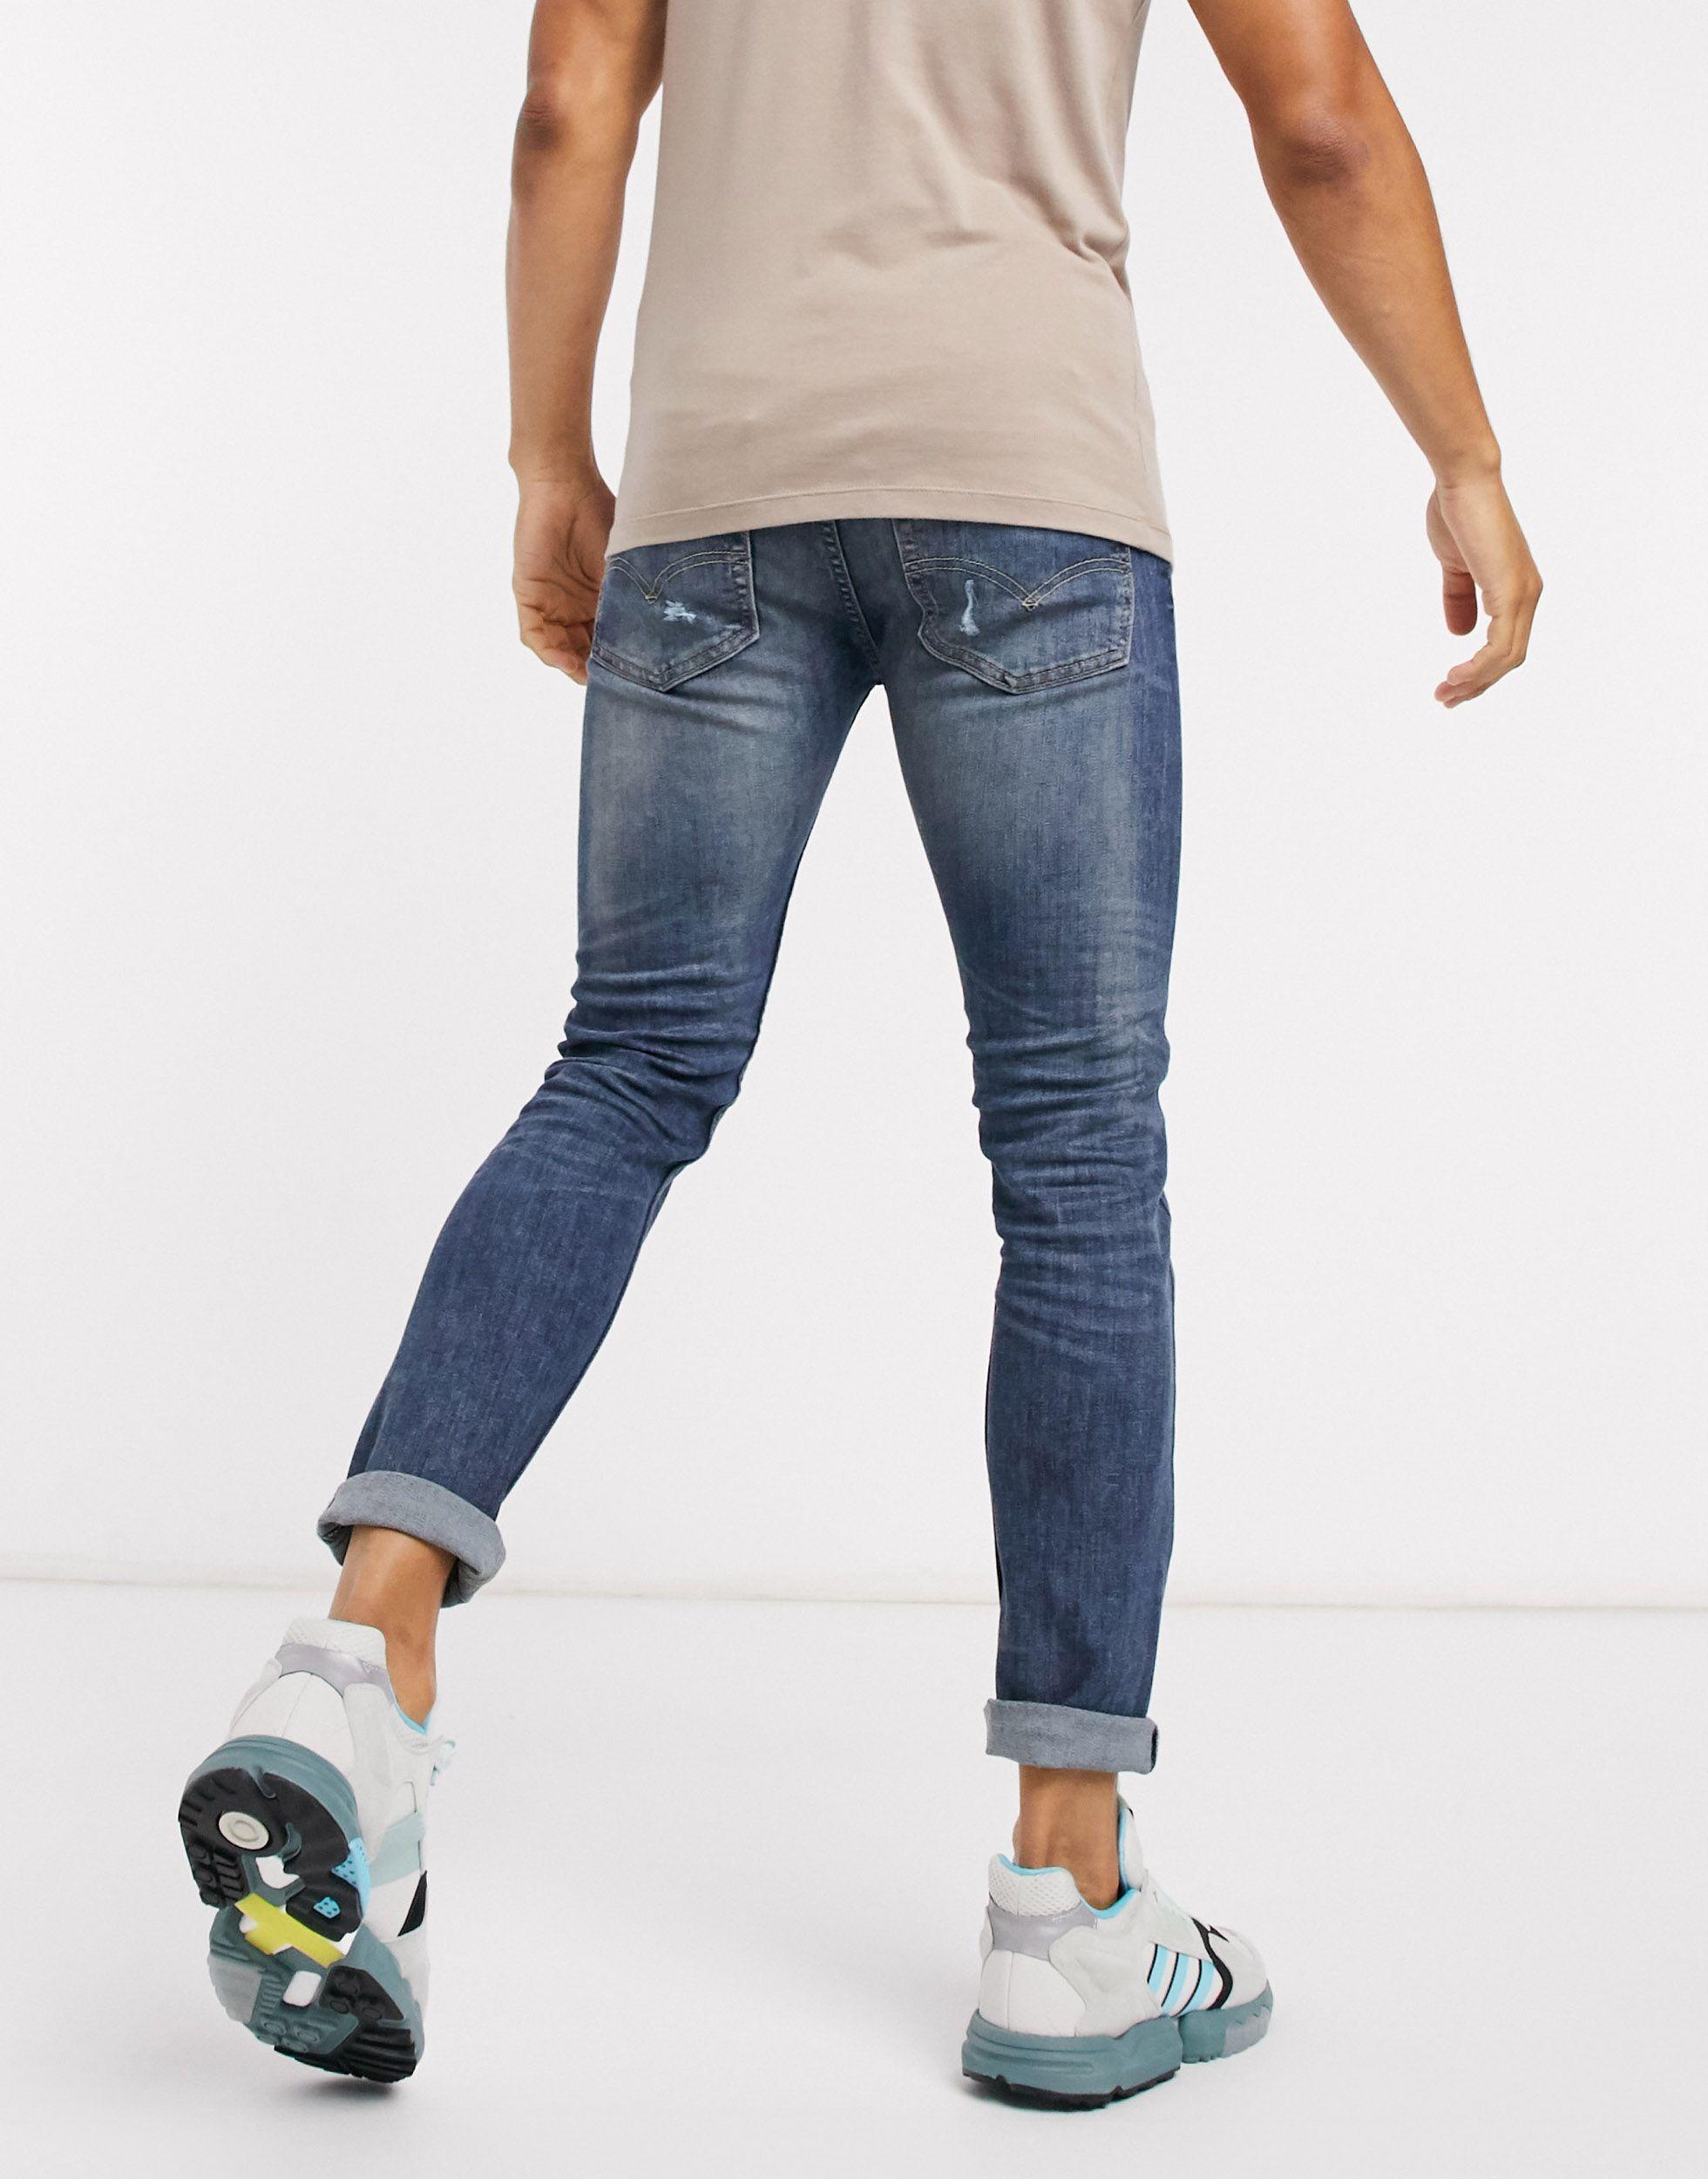 Levi's Denim 519 Super Skinny Fit Hi-ball Jeans in Blue for Men - Lyst